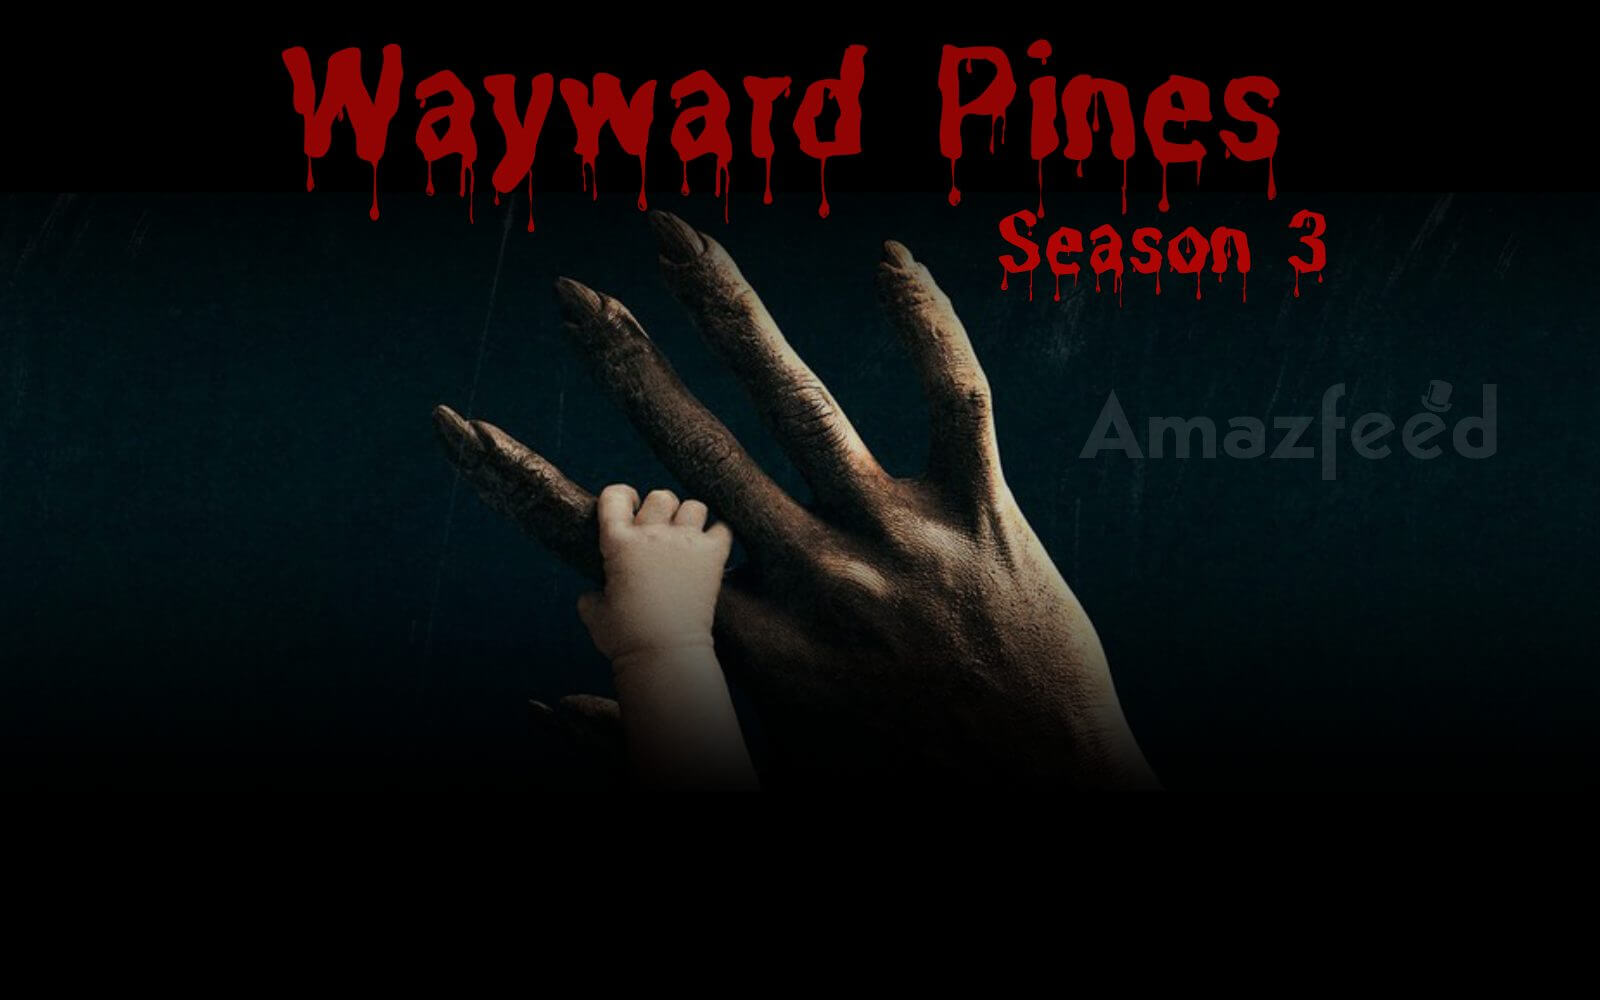 Wayward Pines Season 3 release date